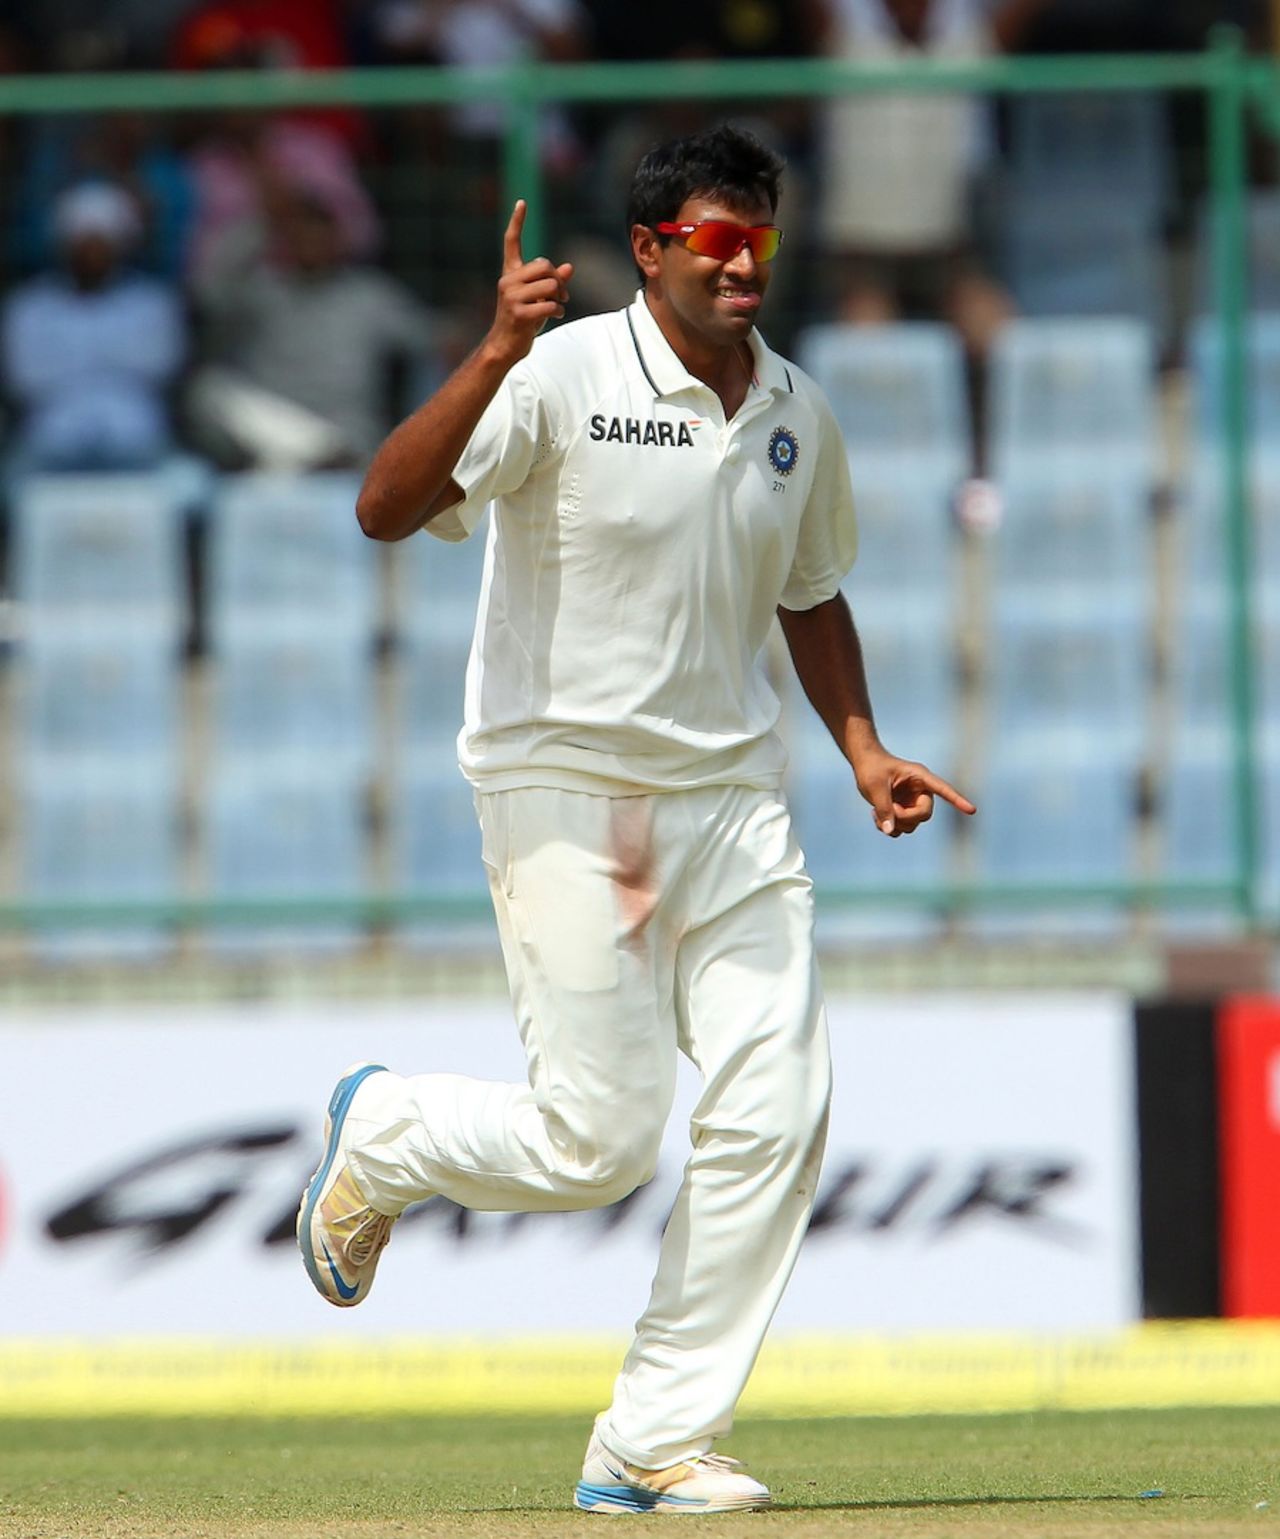 R Ashwin celebrates the wicket of Mitchell Johnson, India v Australia, 4th Test, Delhi, 1st day, March 22, 2013